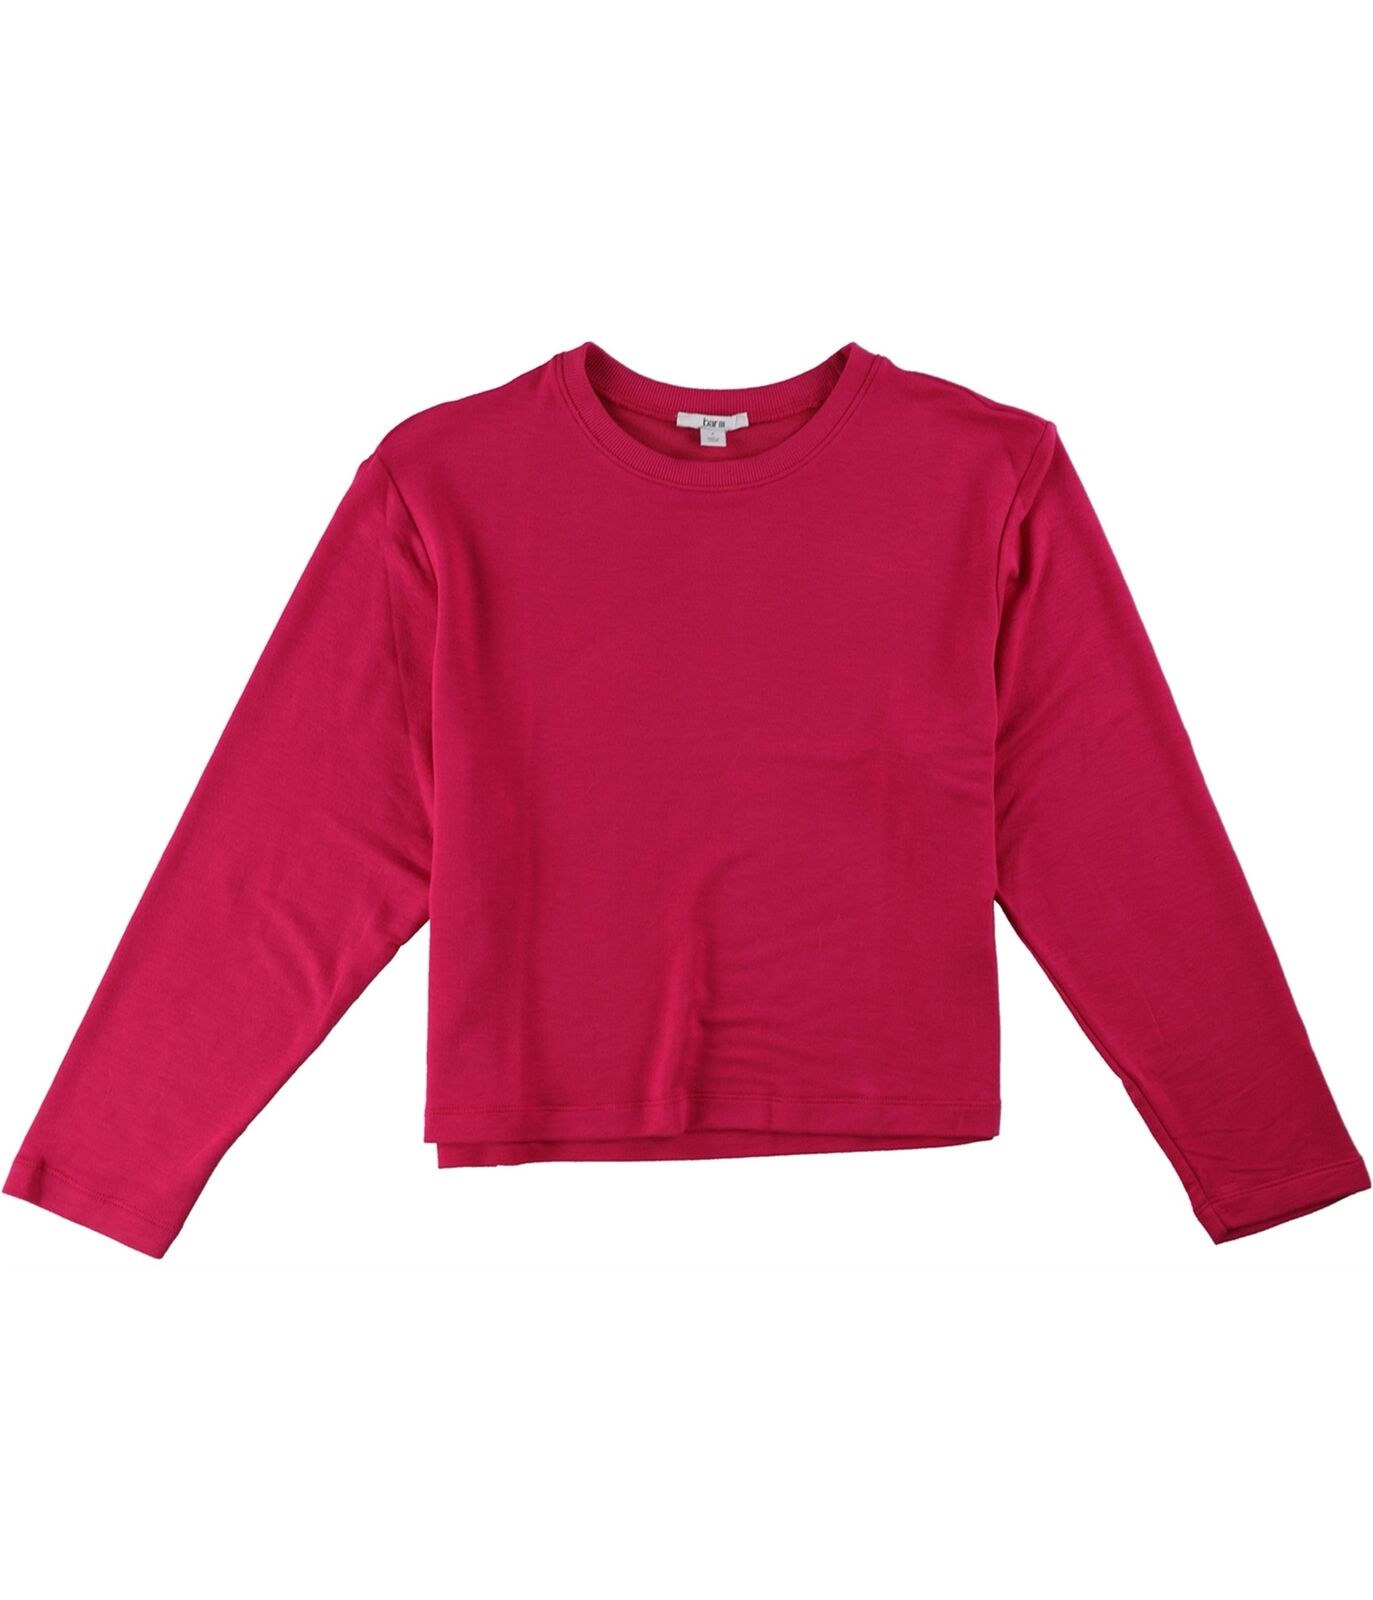 Bar Iii Womens Cropped Sweatshirt, Pink, Large